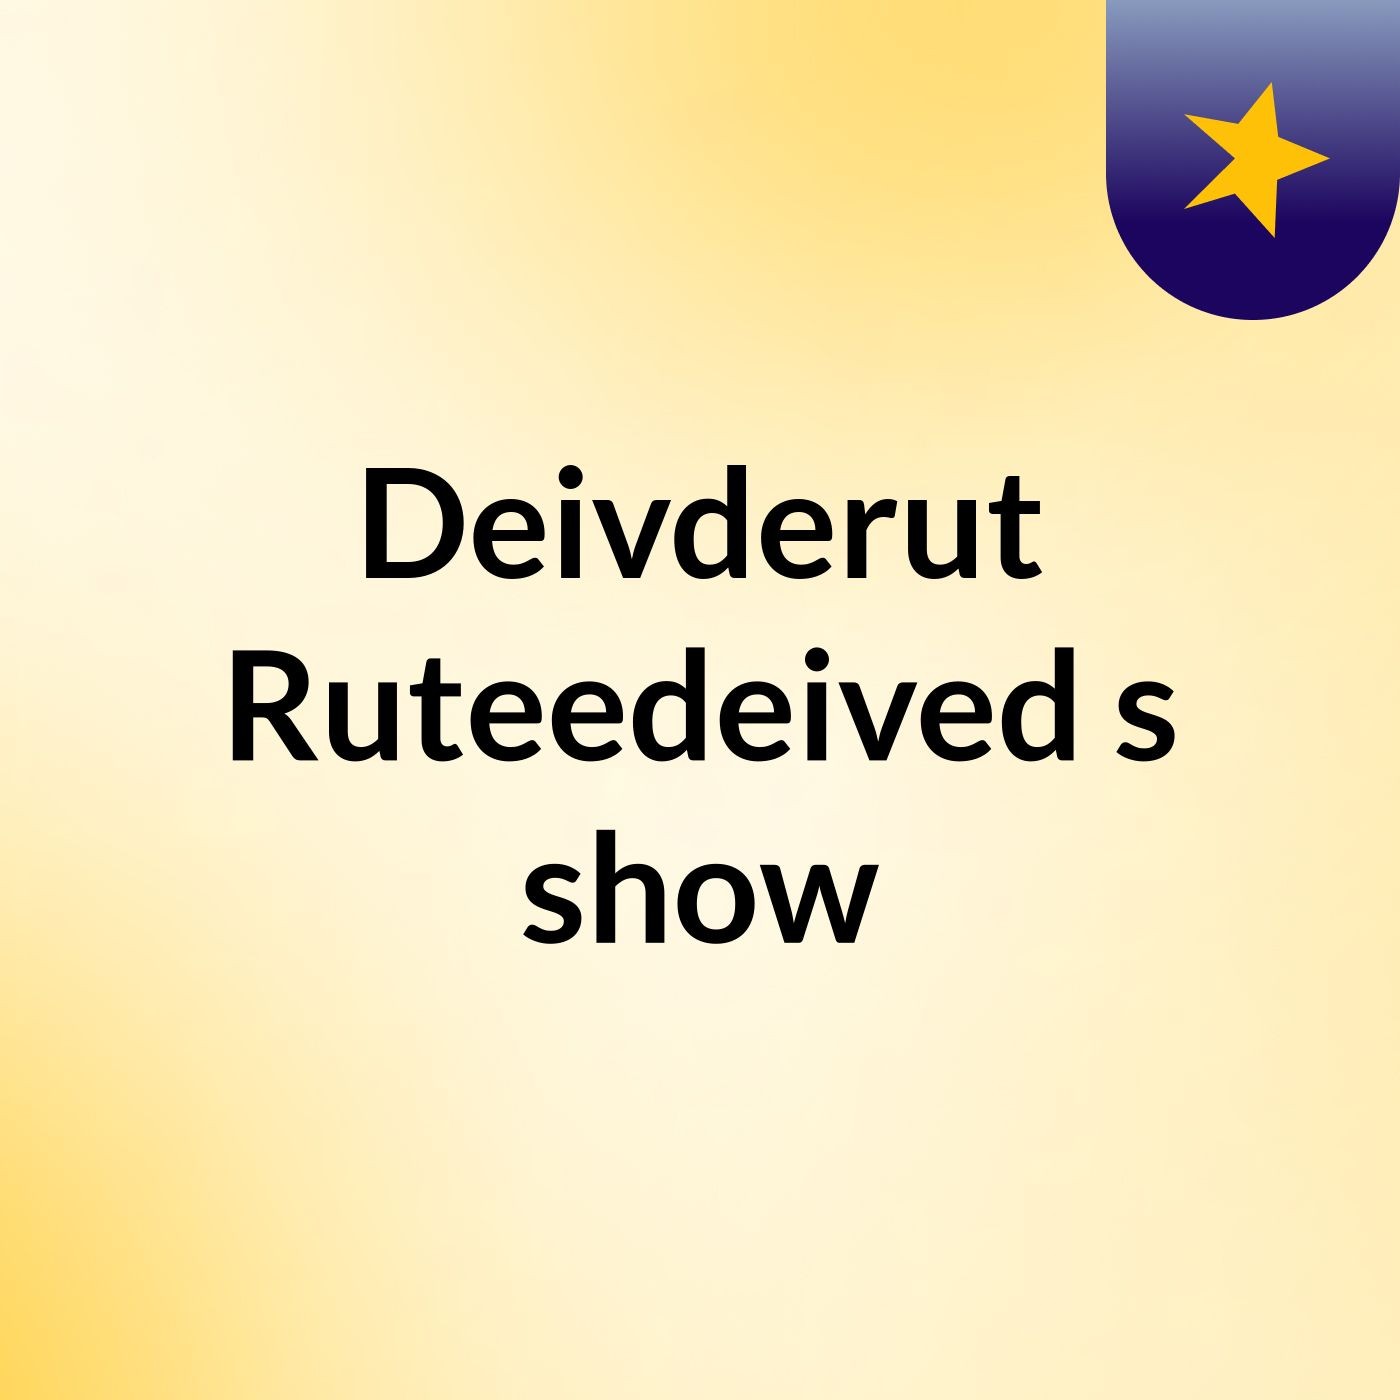 Deivderut Ruteedeived's show